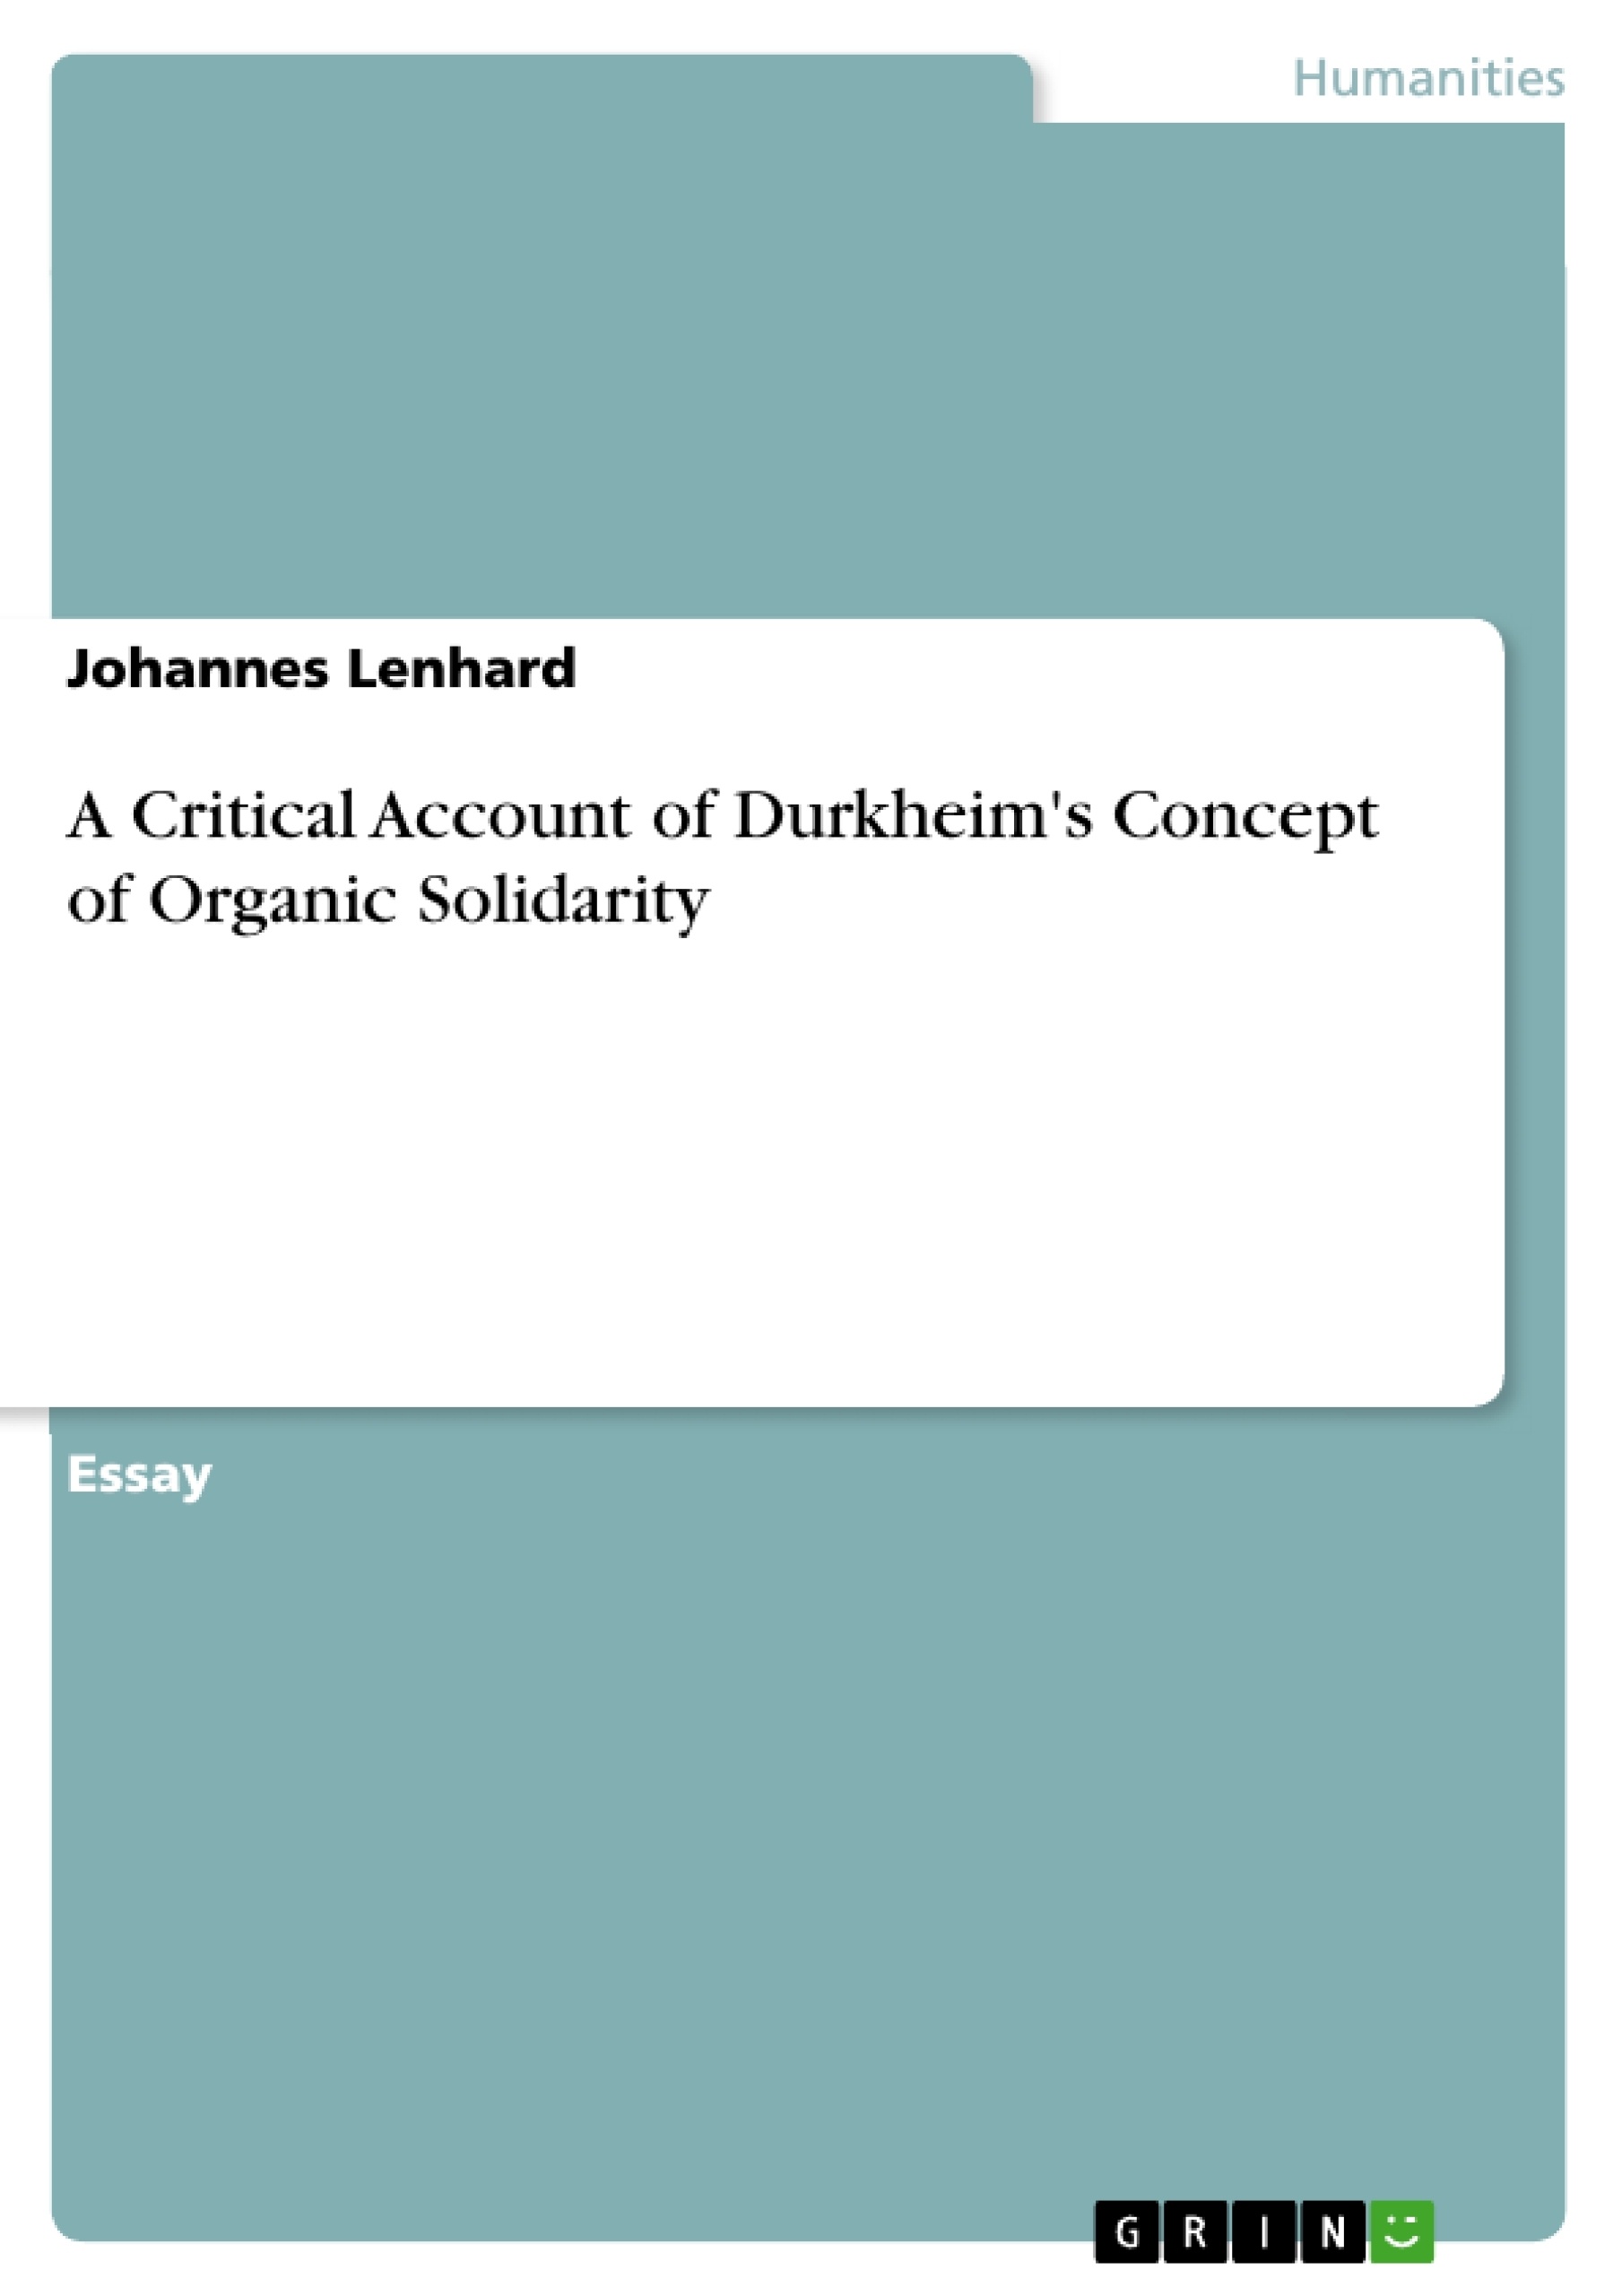 Emile durkheim social solidarity essay